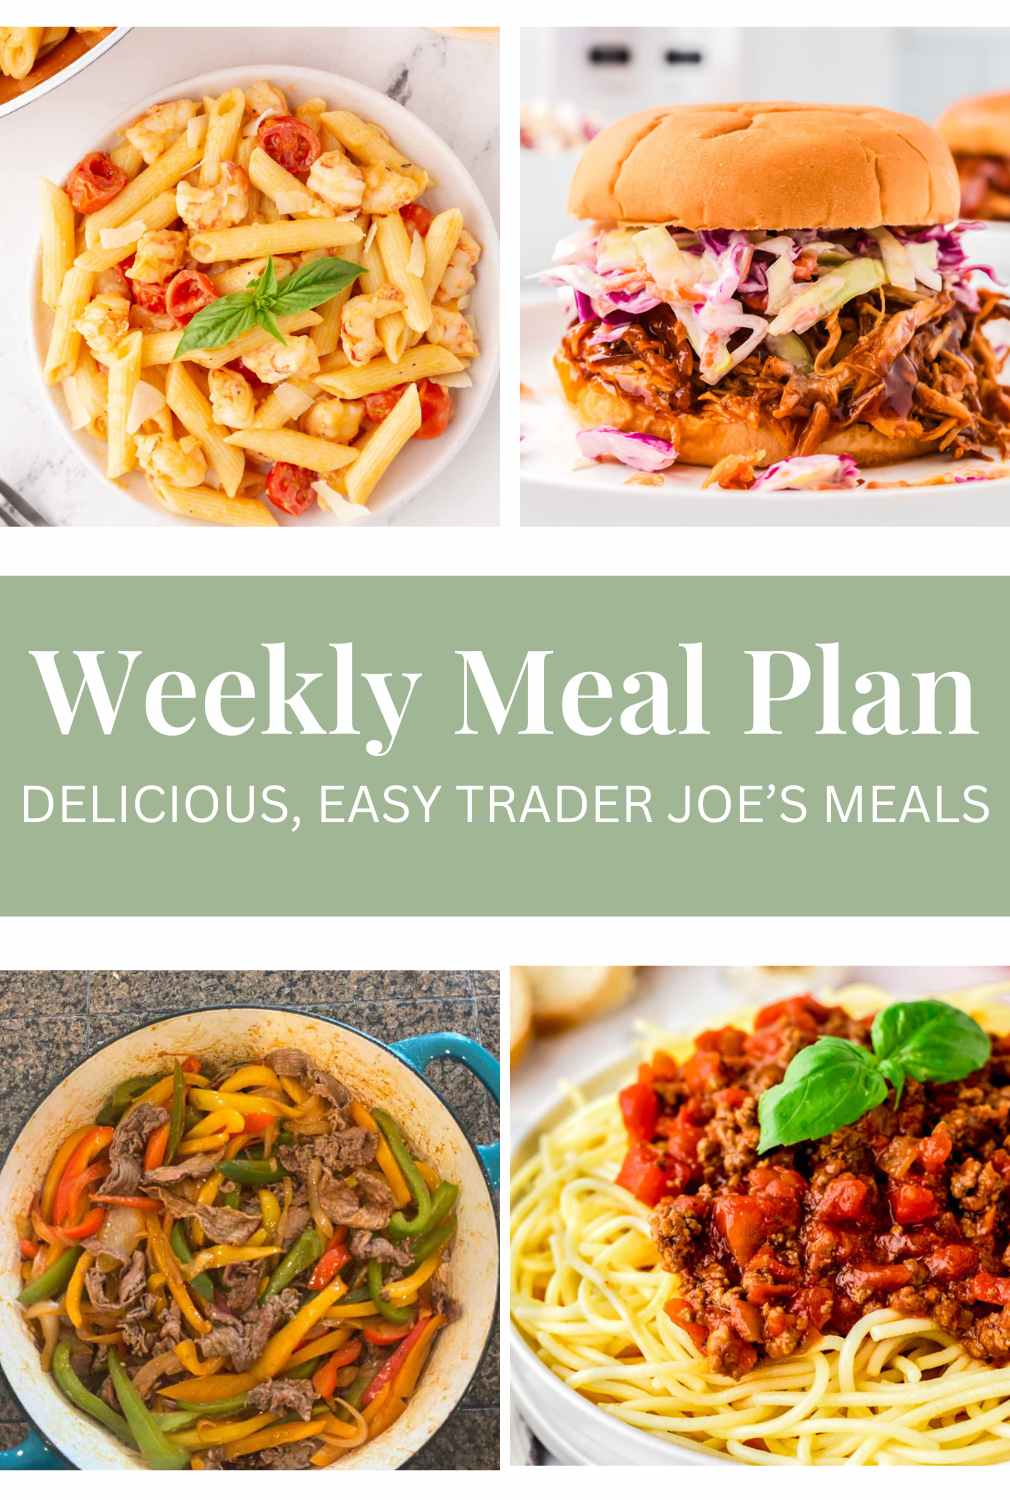 Trader Joe's weekly meal plan graphic.